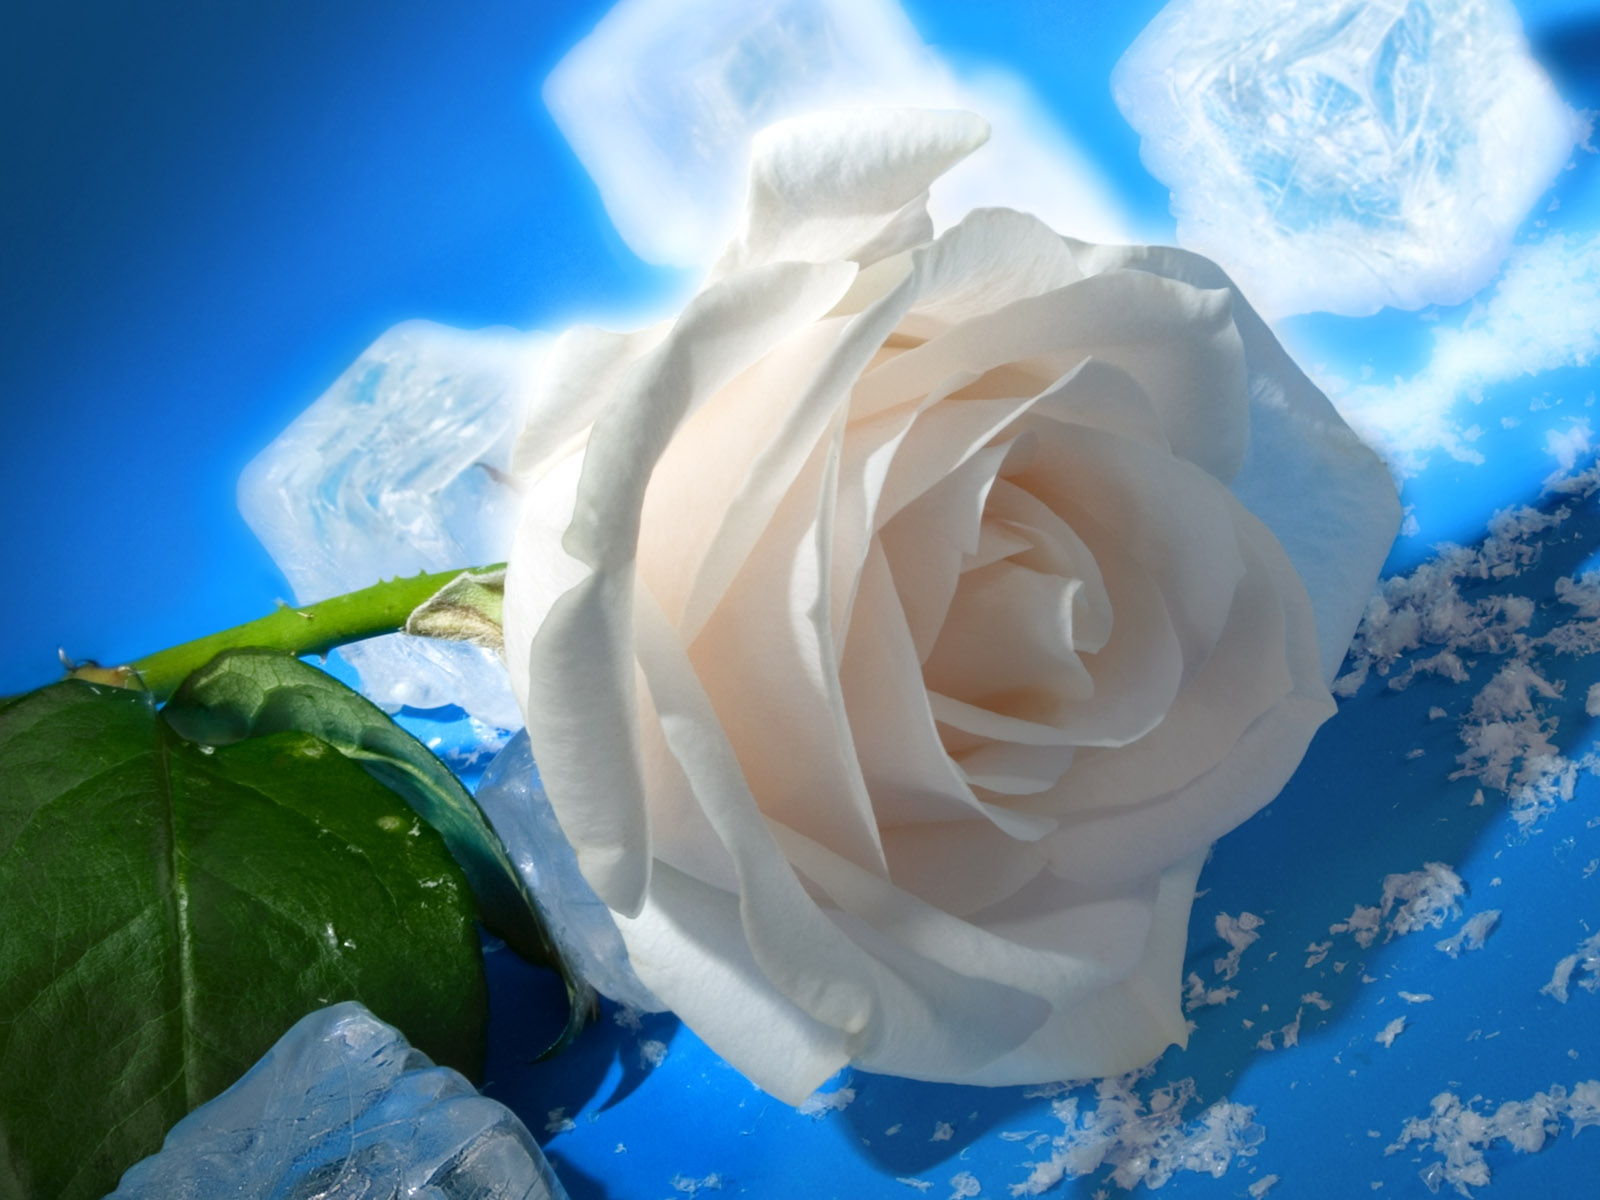 The Best Top Desktop Roses Wallpaper HD Rose White